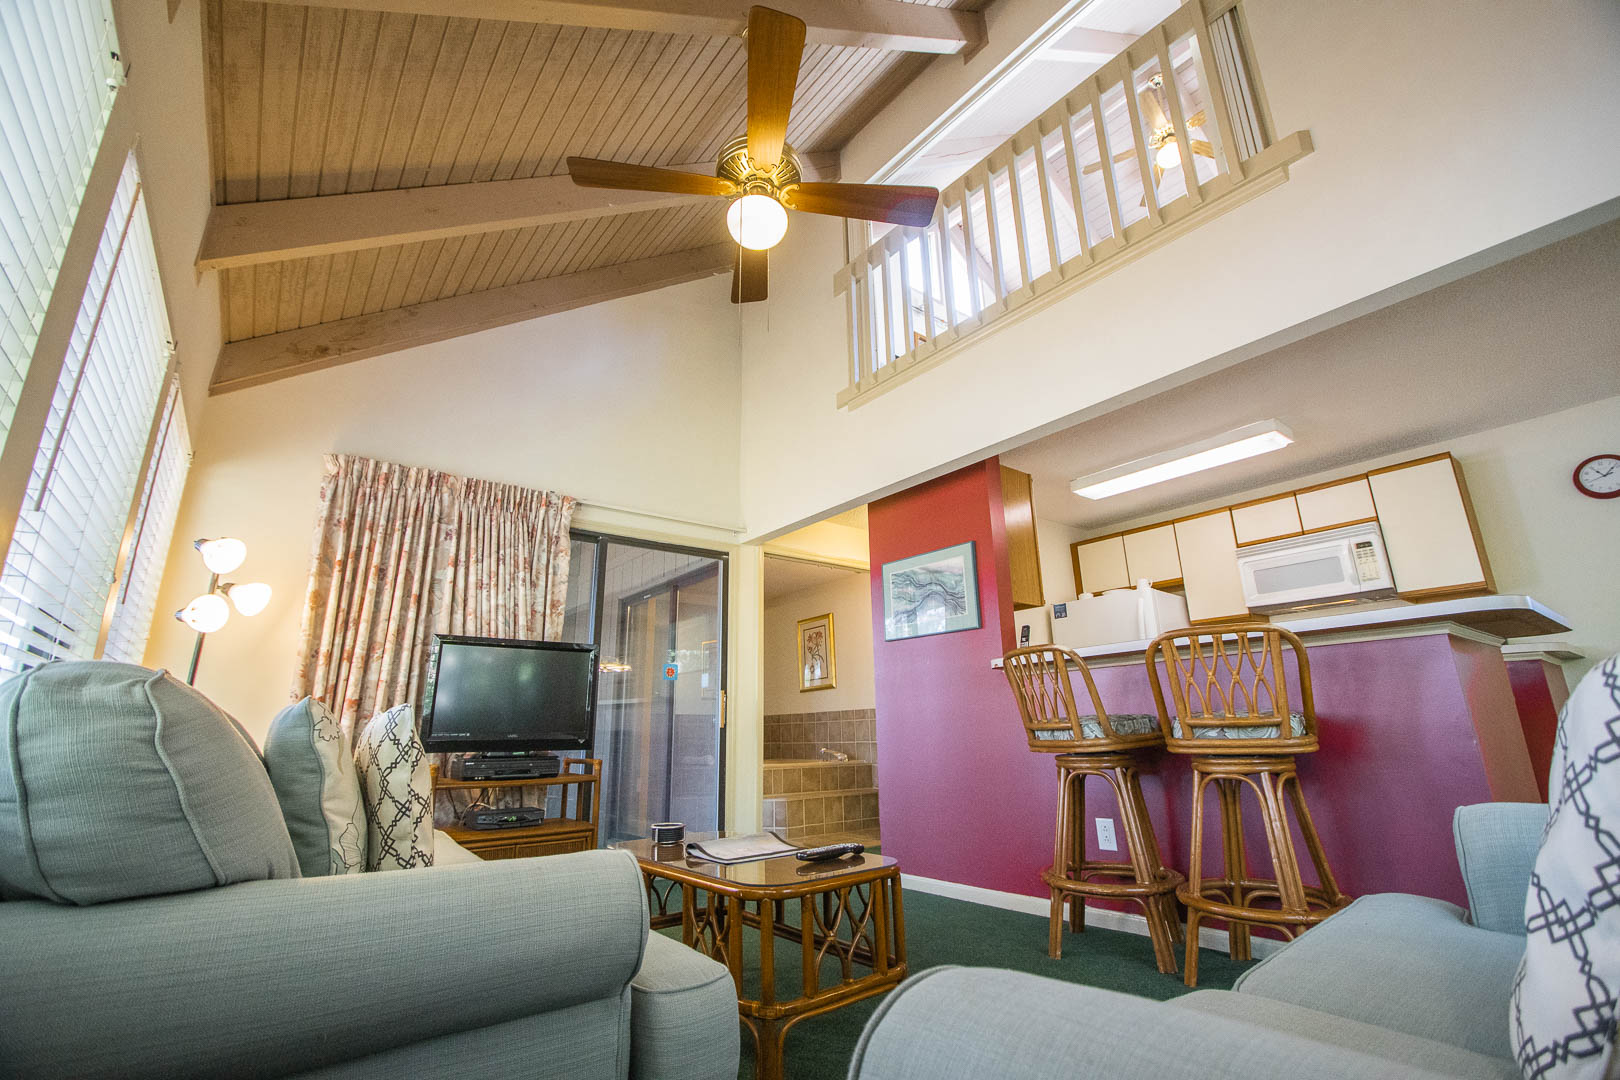 A spacious living room area at VRI's Sandcastle Cove in New Bern, North Carolina.